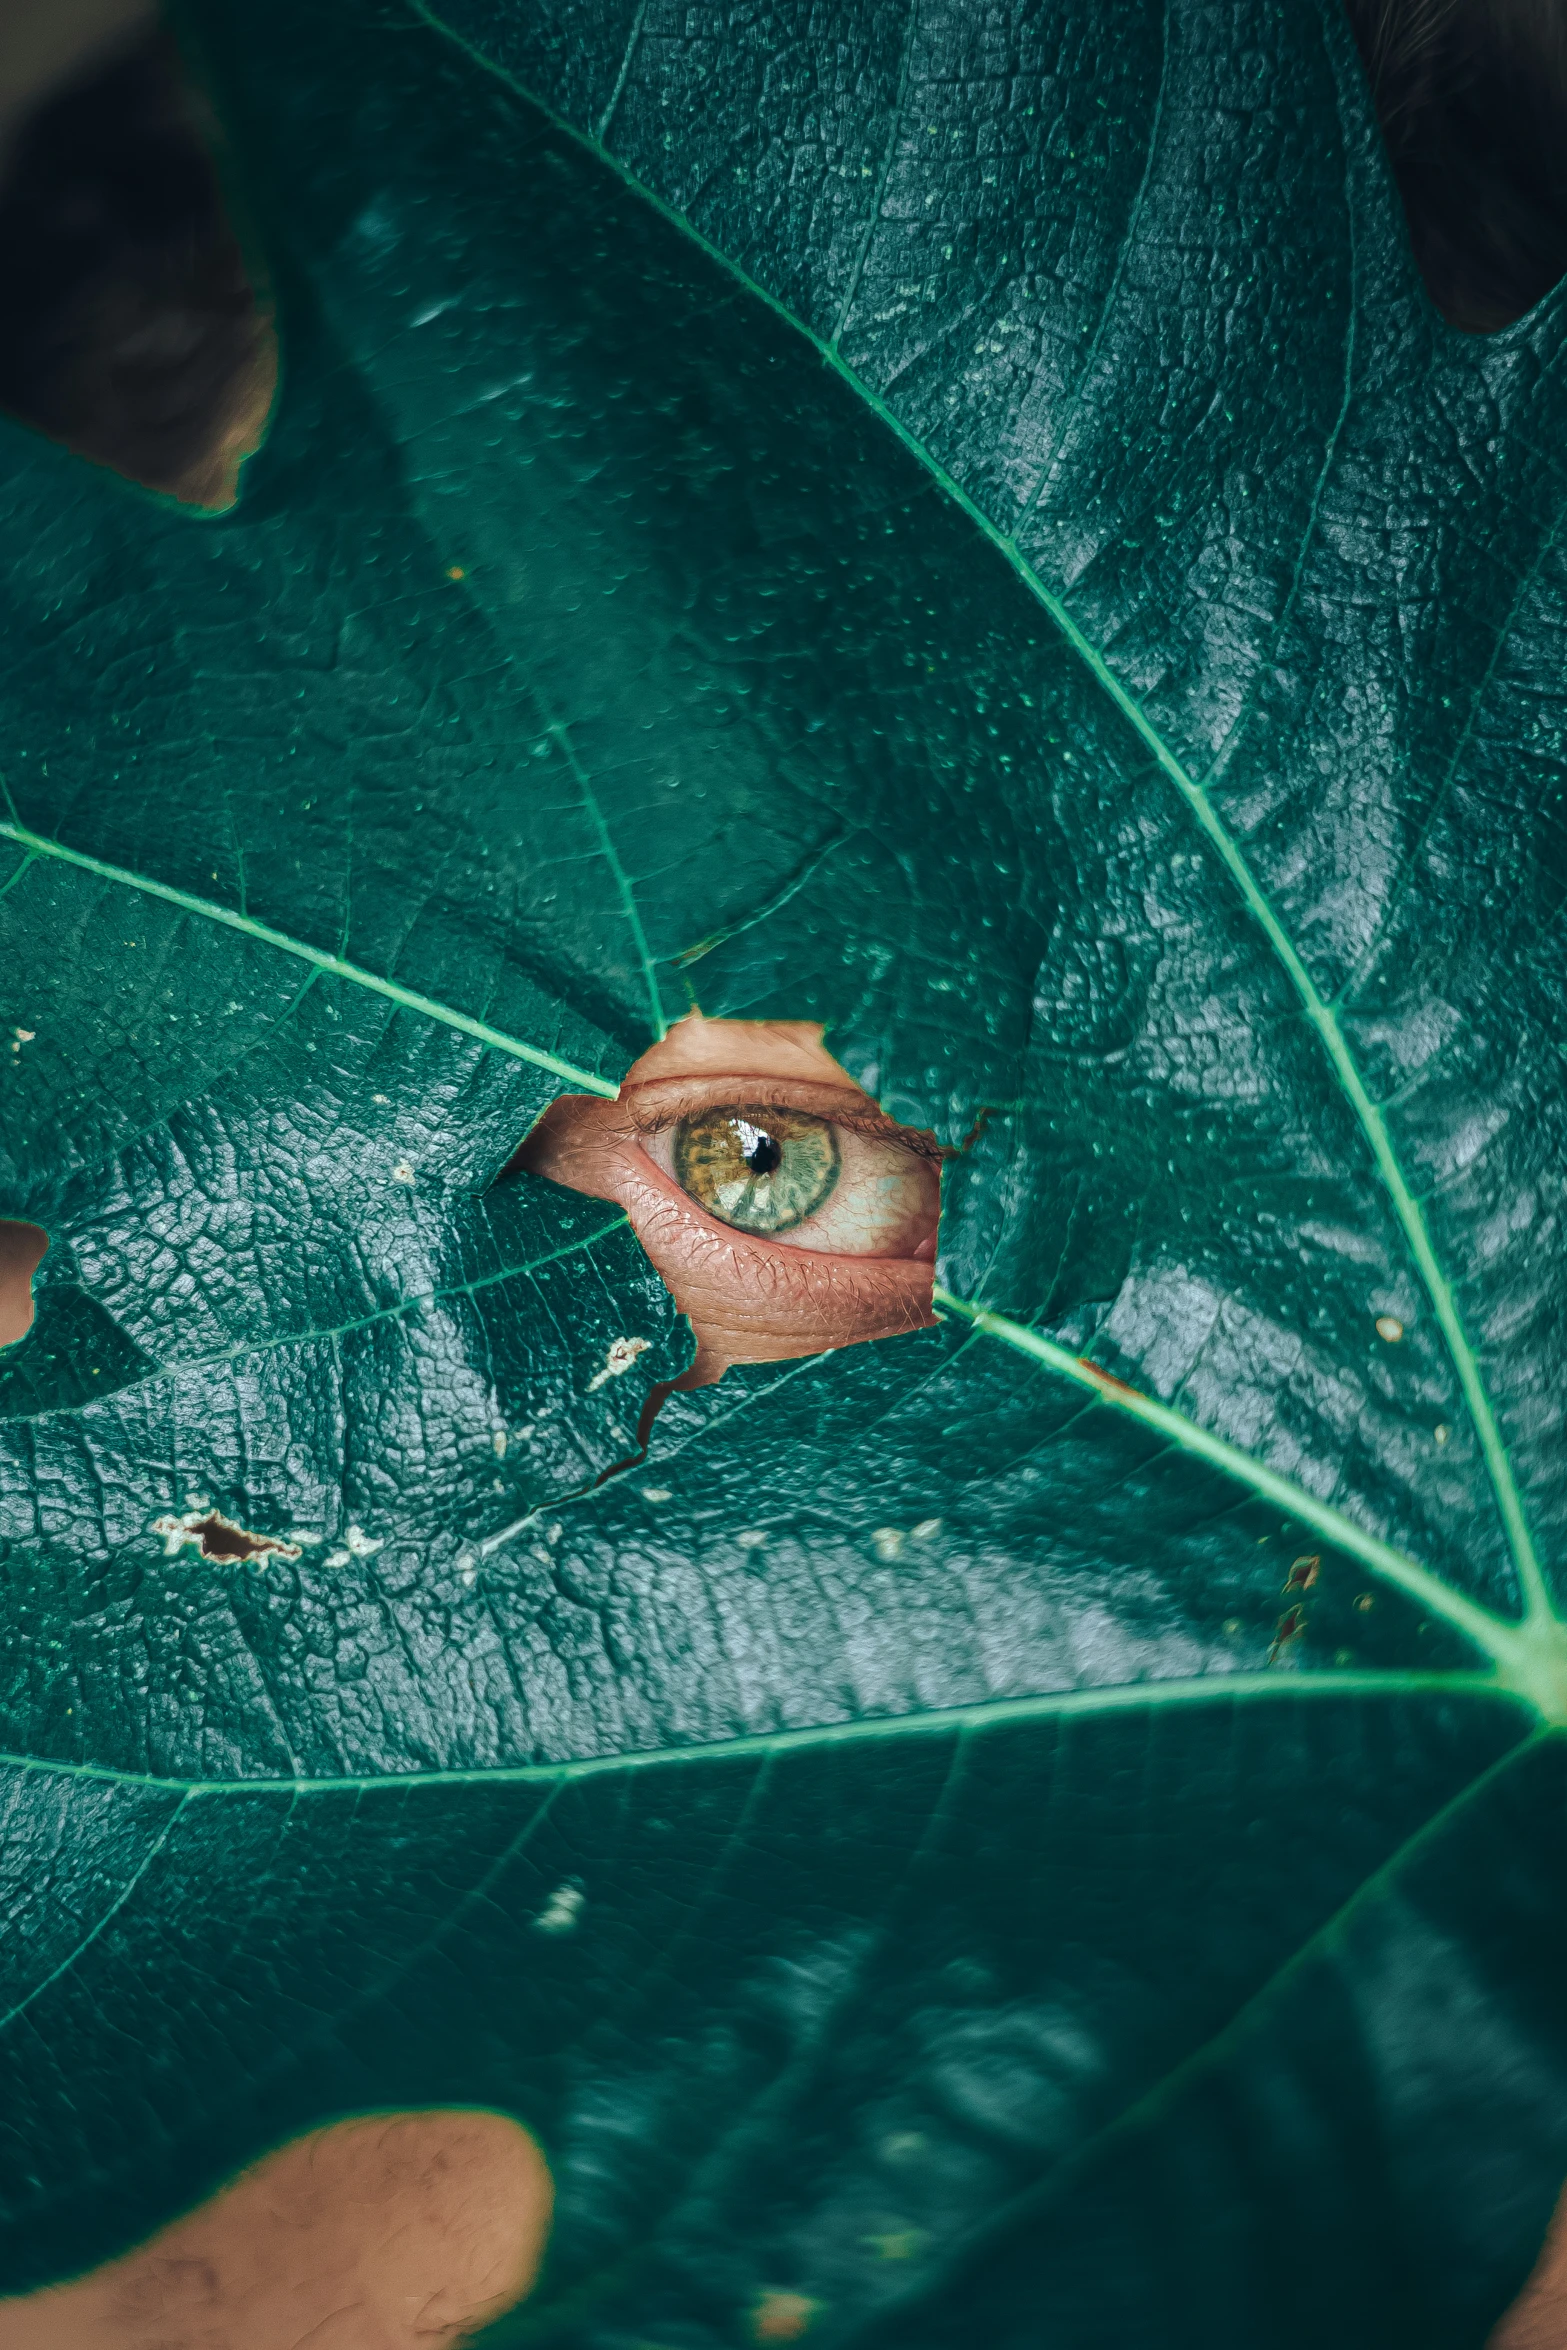 a close up s of an eye through a leaf